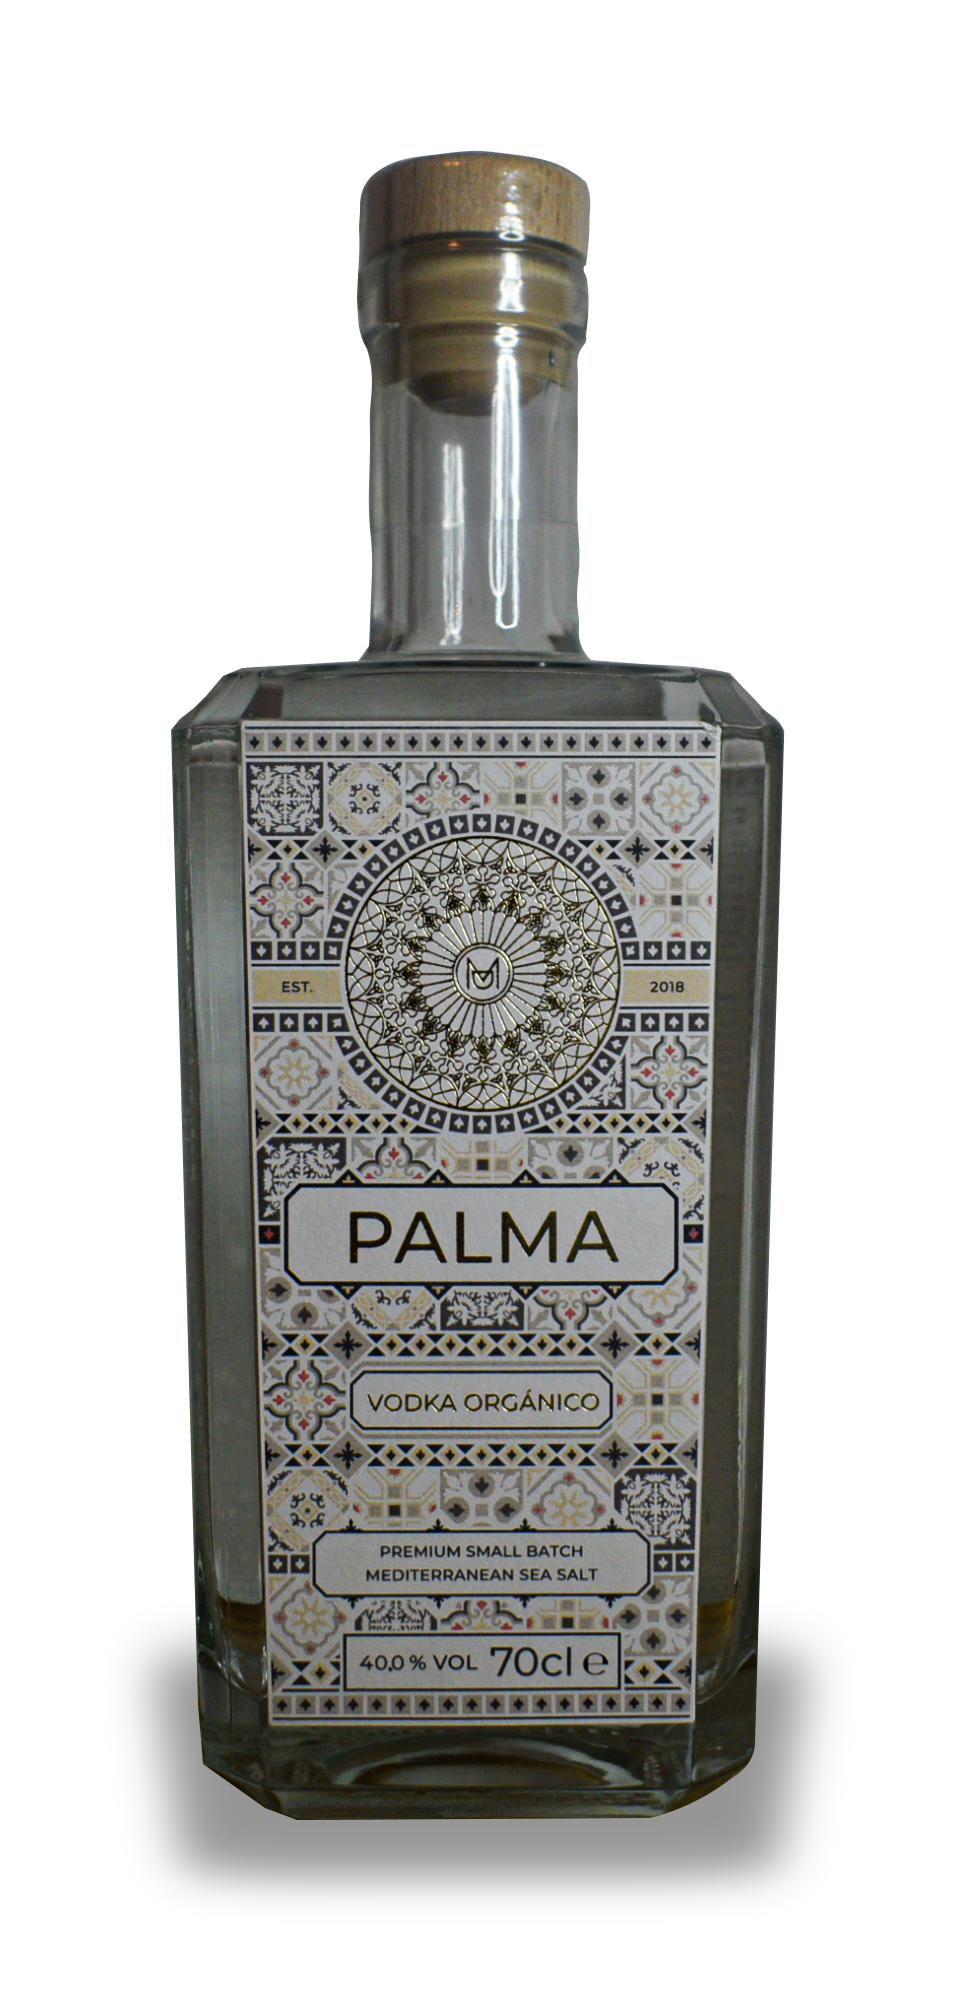 PALMA Vodka Probierflasche 5cl